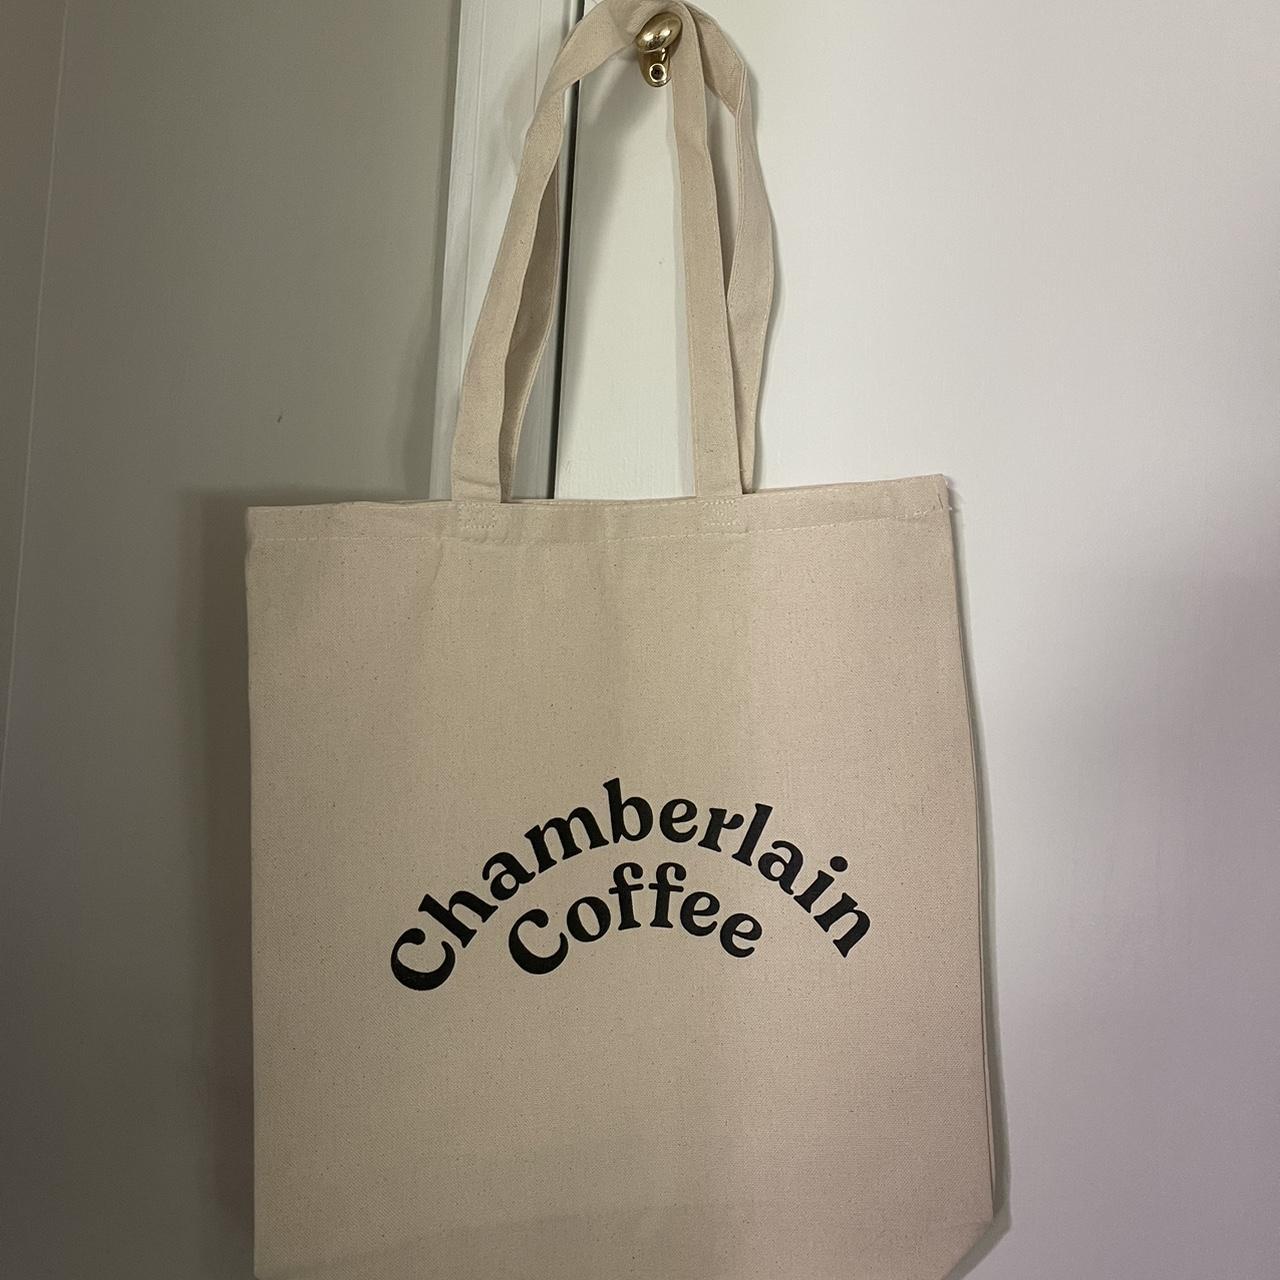 Chamberlain Coffee Tote Bag Never used sadly /... - Depop